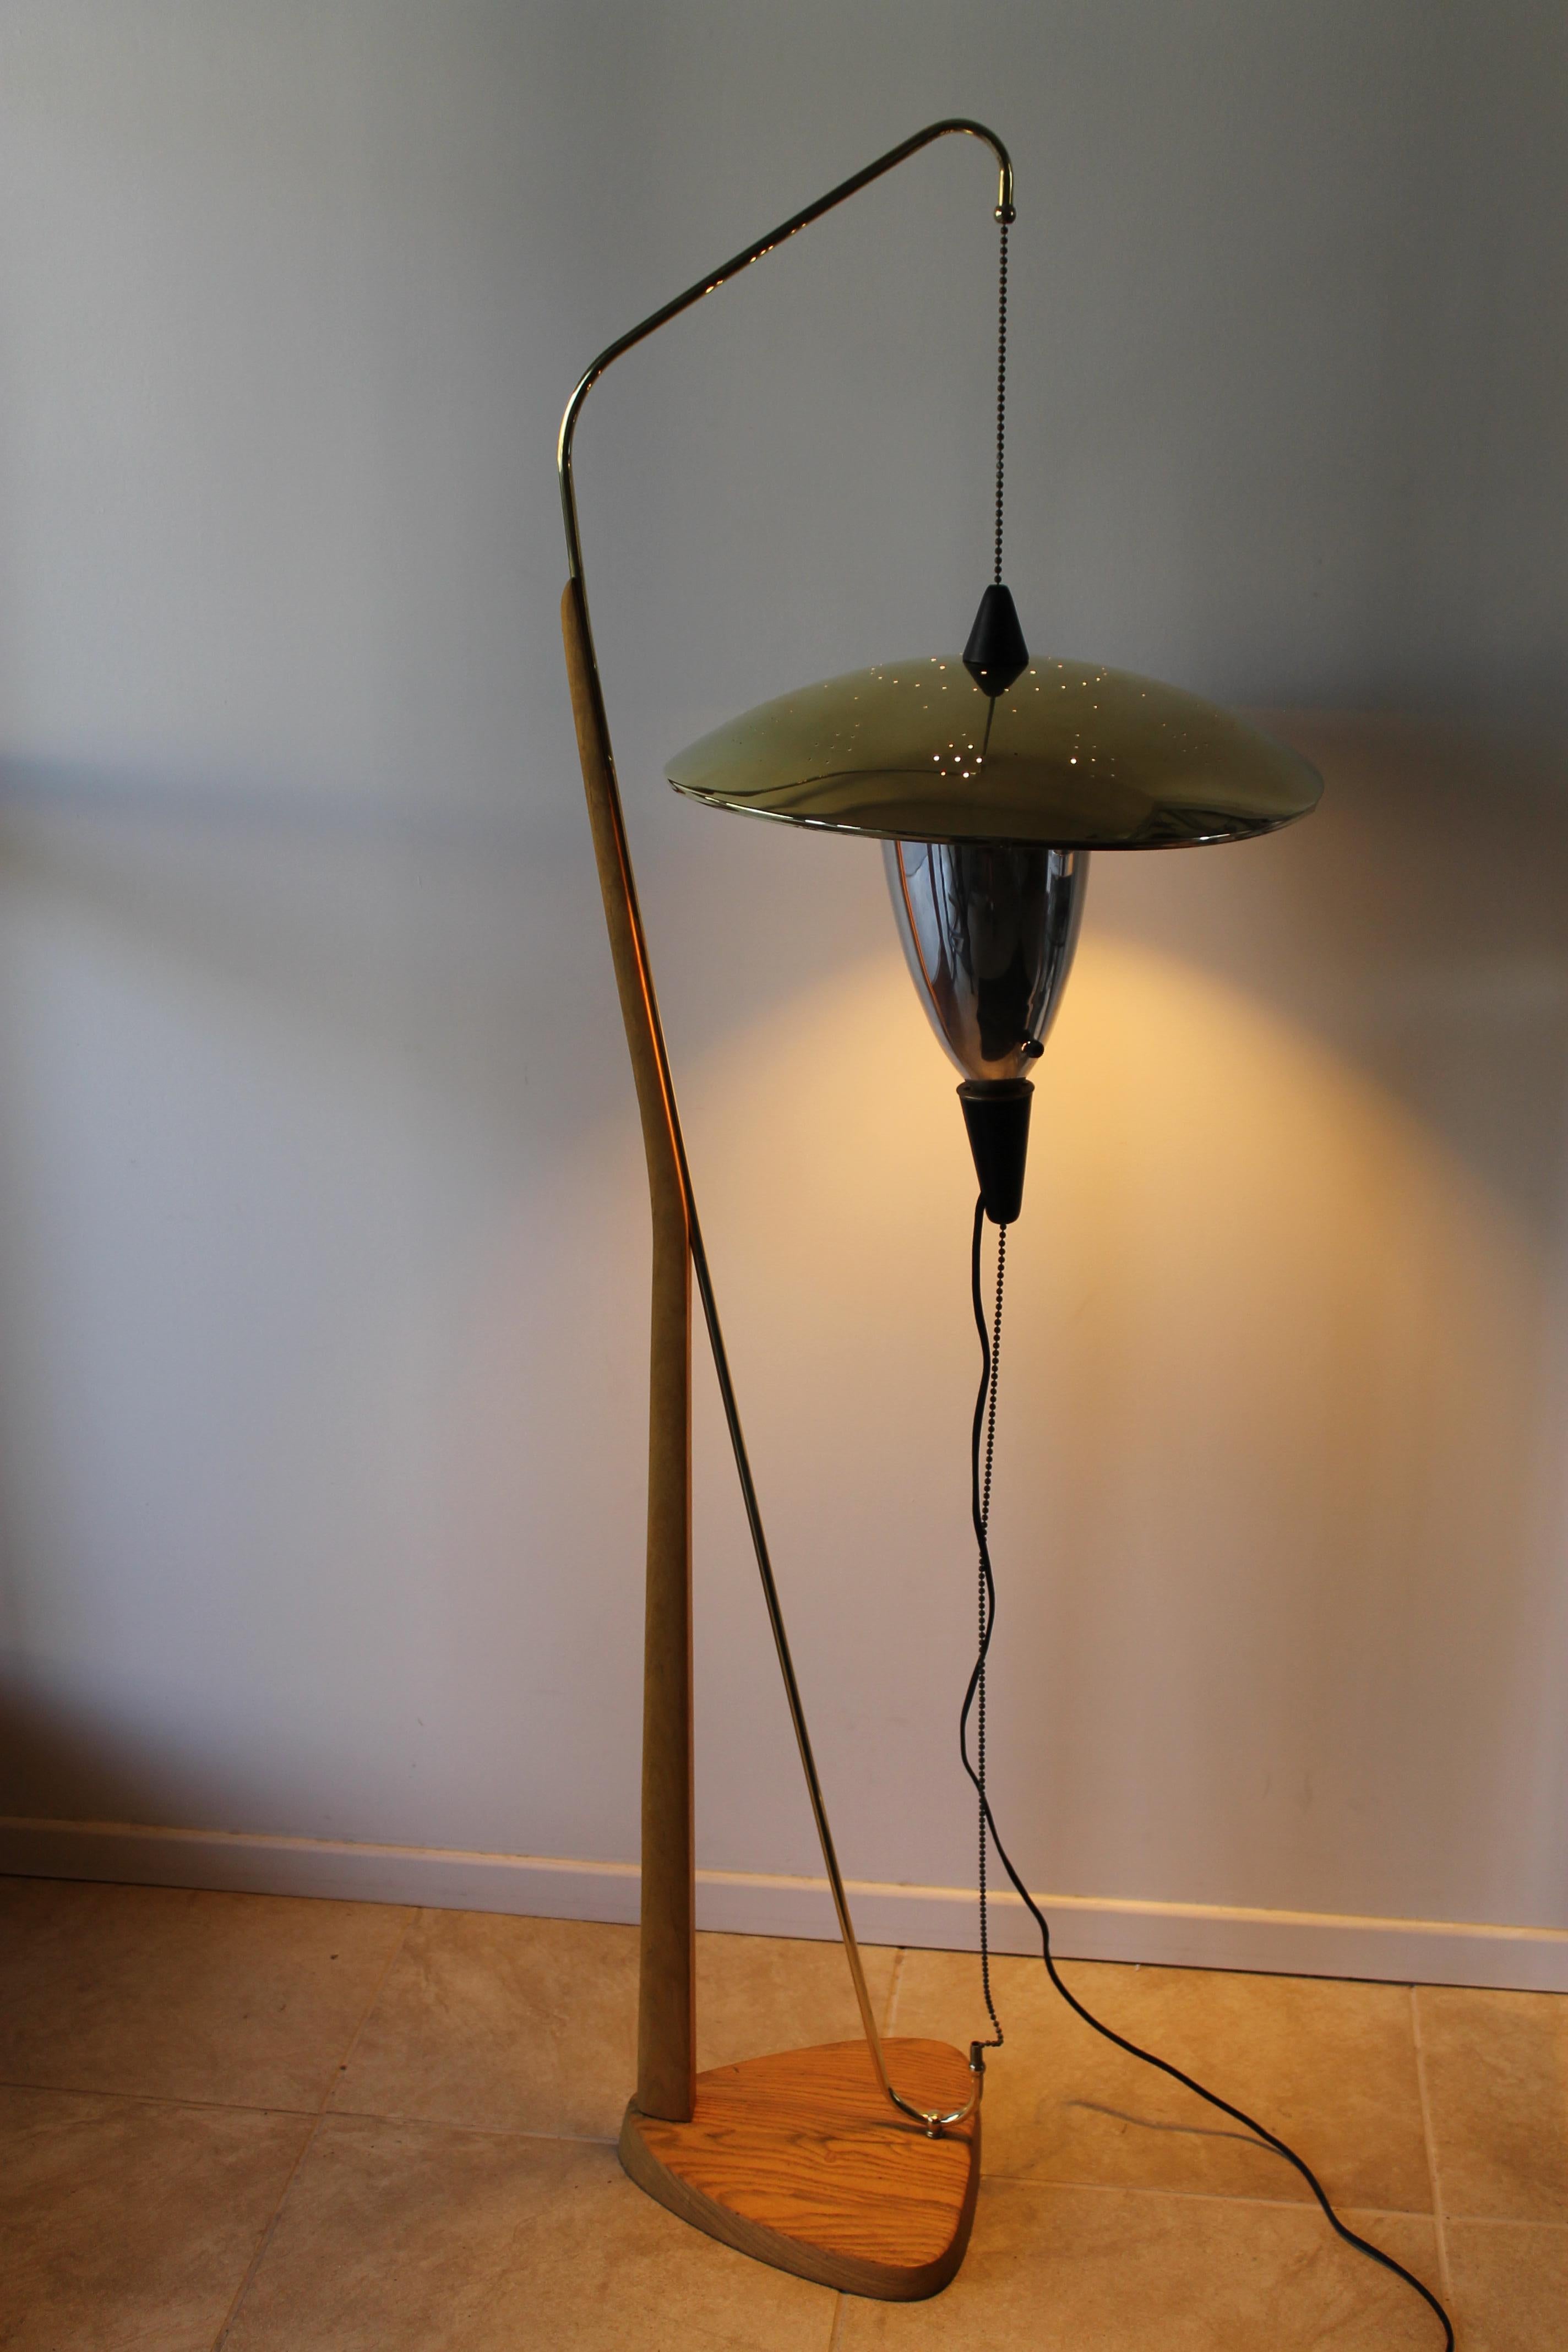 Adjustable floor lamp by Arthur F. Jacobs Height. Patented in 1954. Floor lamp measures 17.5